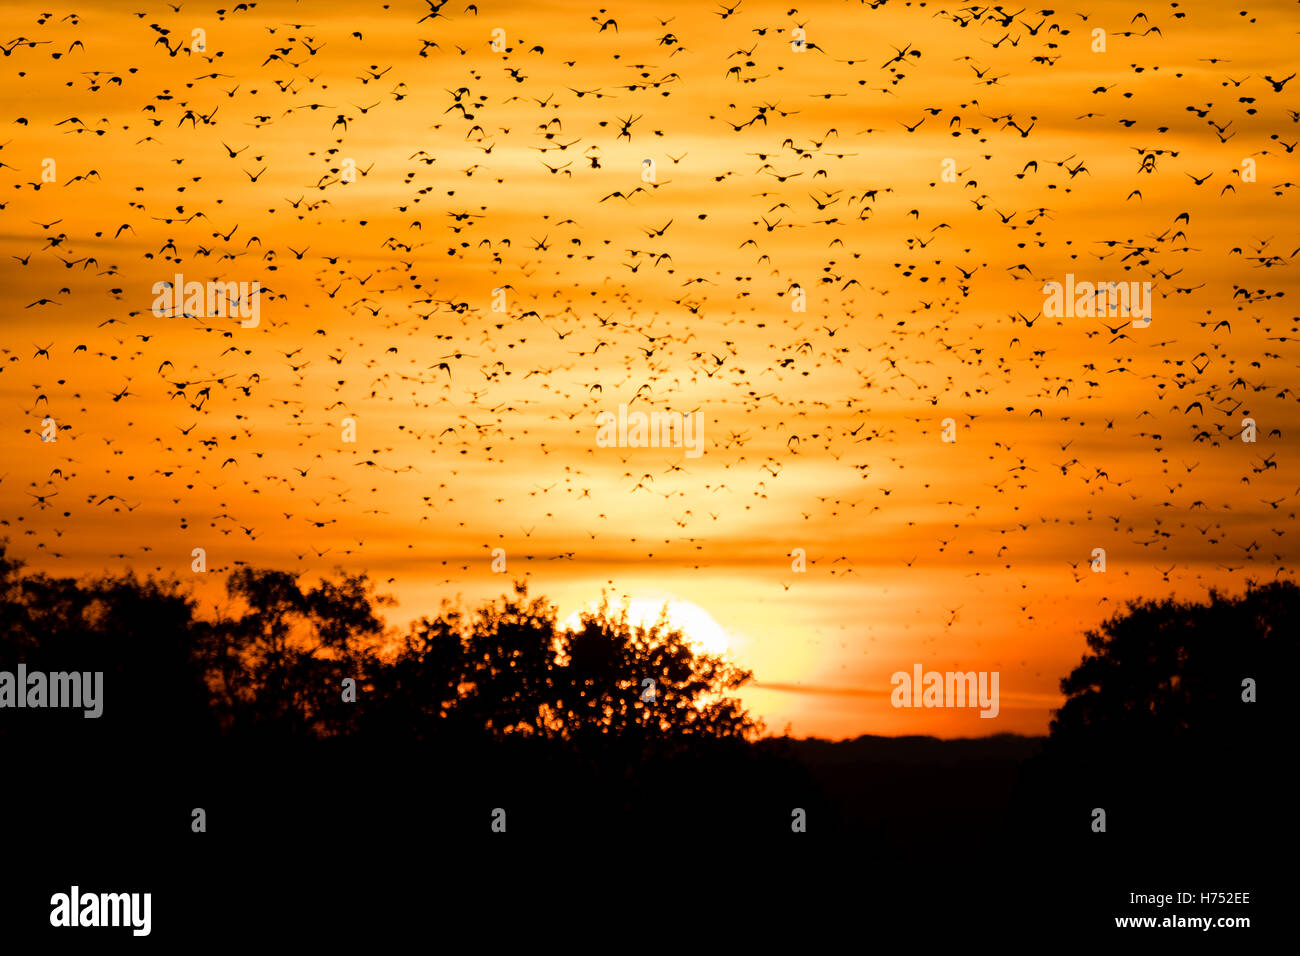 Flock of starlings (Sturnus vulgaris) in front of sunset. Murmuration at dusk fills sky with huge numbers of birds Stock Photo